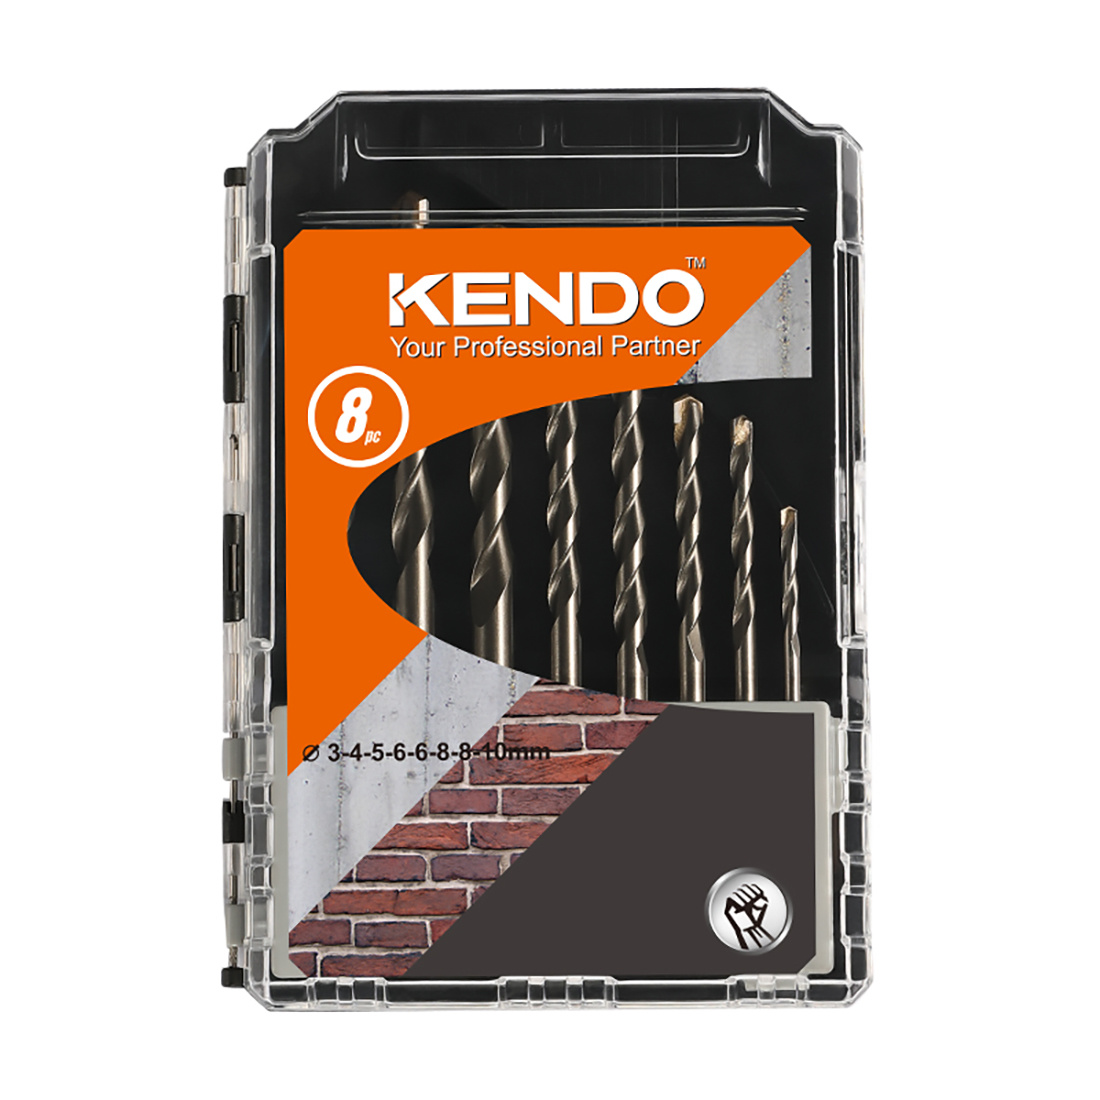 Buy Kendo Masonry Drill 8 Pc Dia. 3-4-5-6*2-8*2-10 Online | Power Tools | Qetaat.com